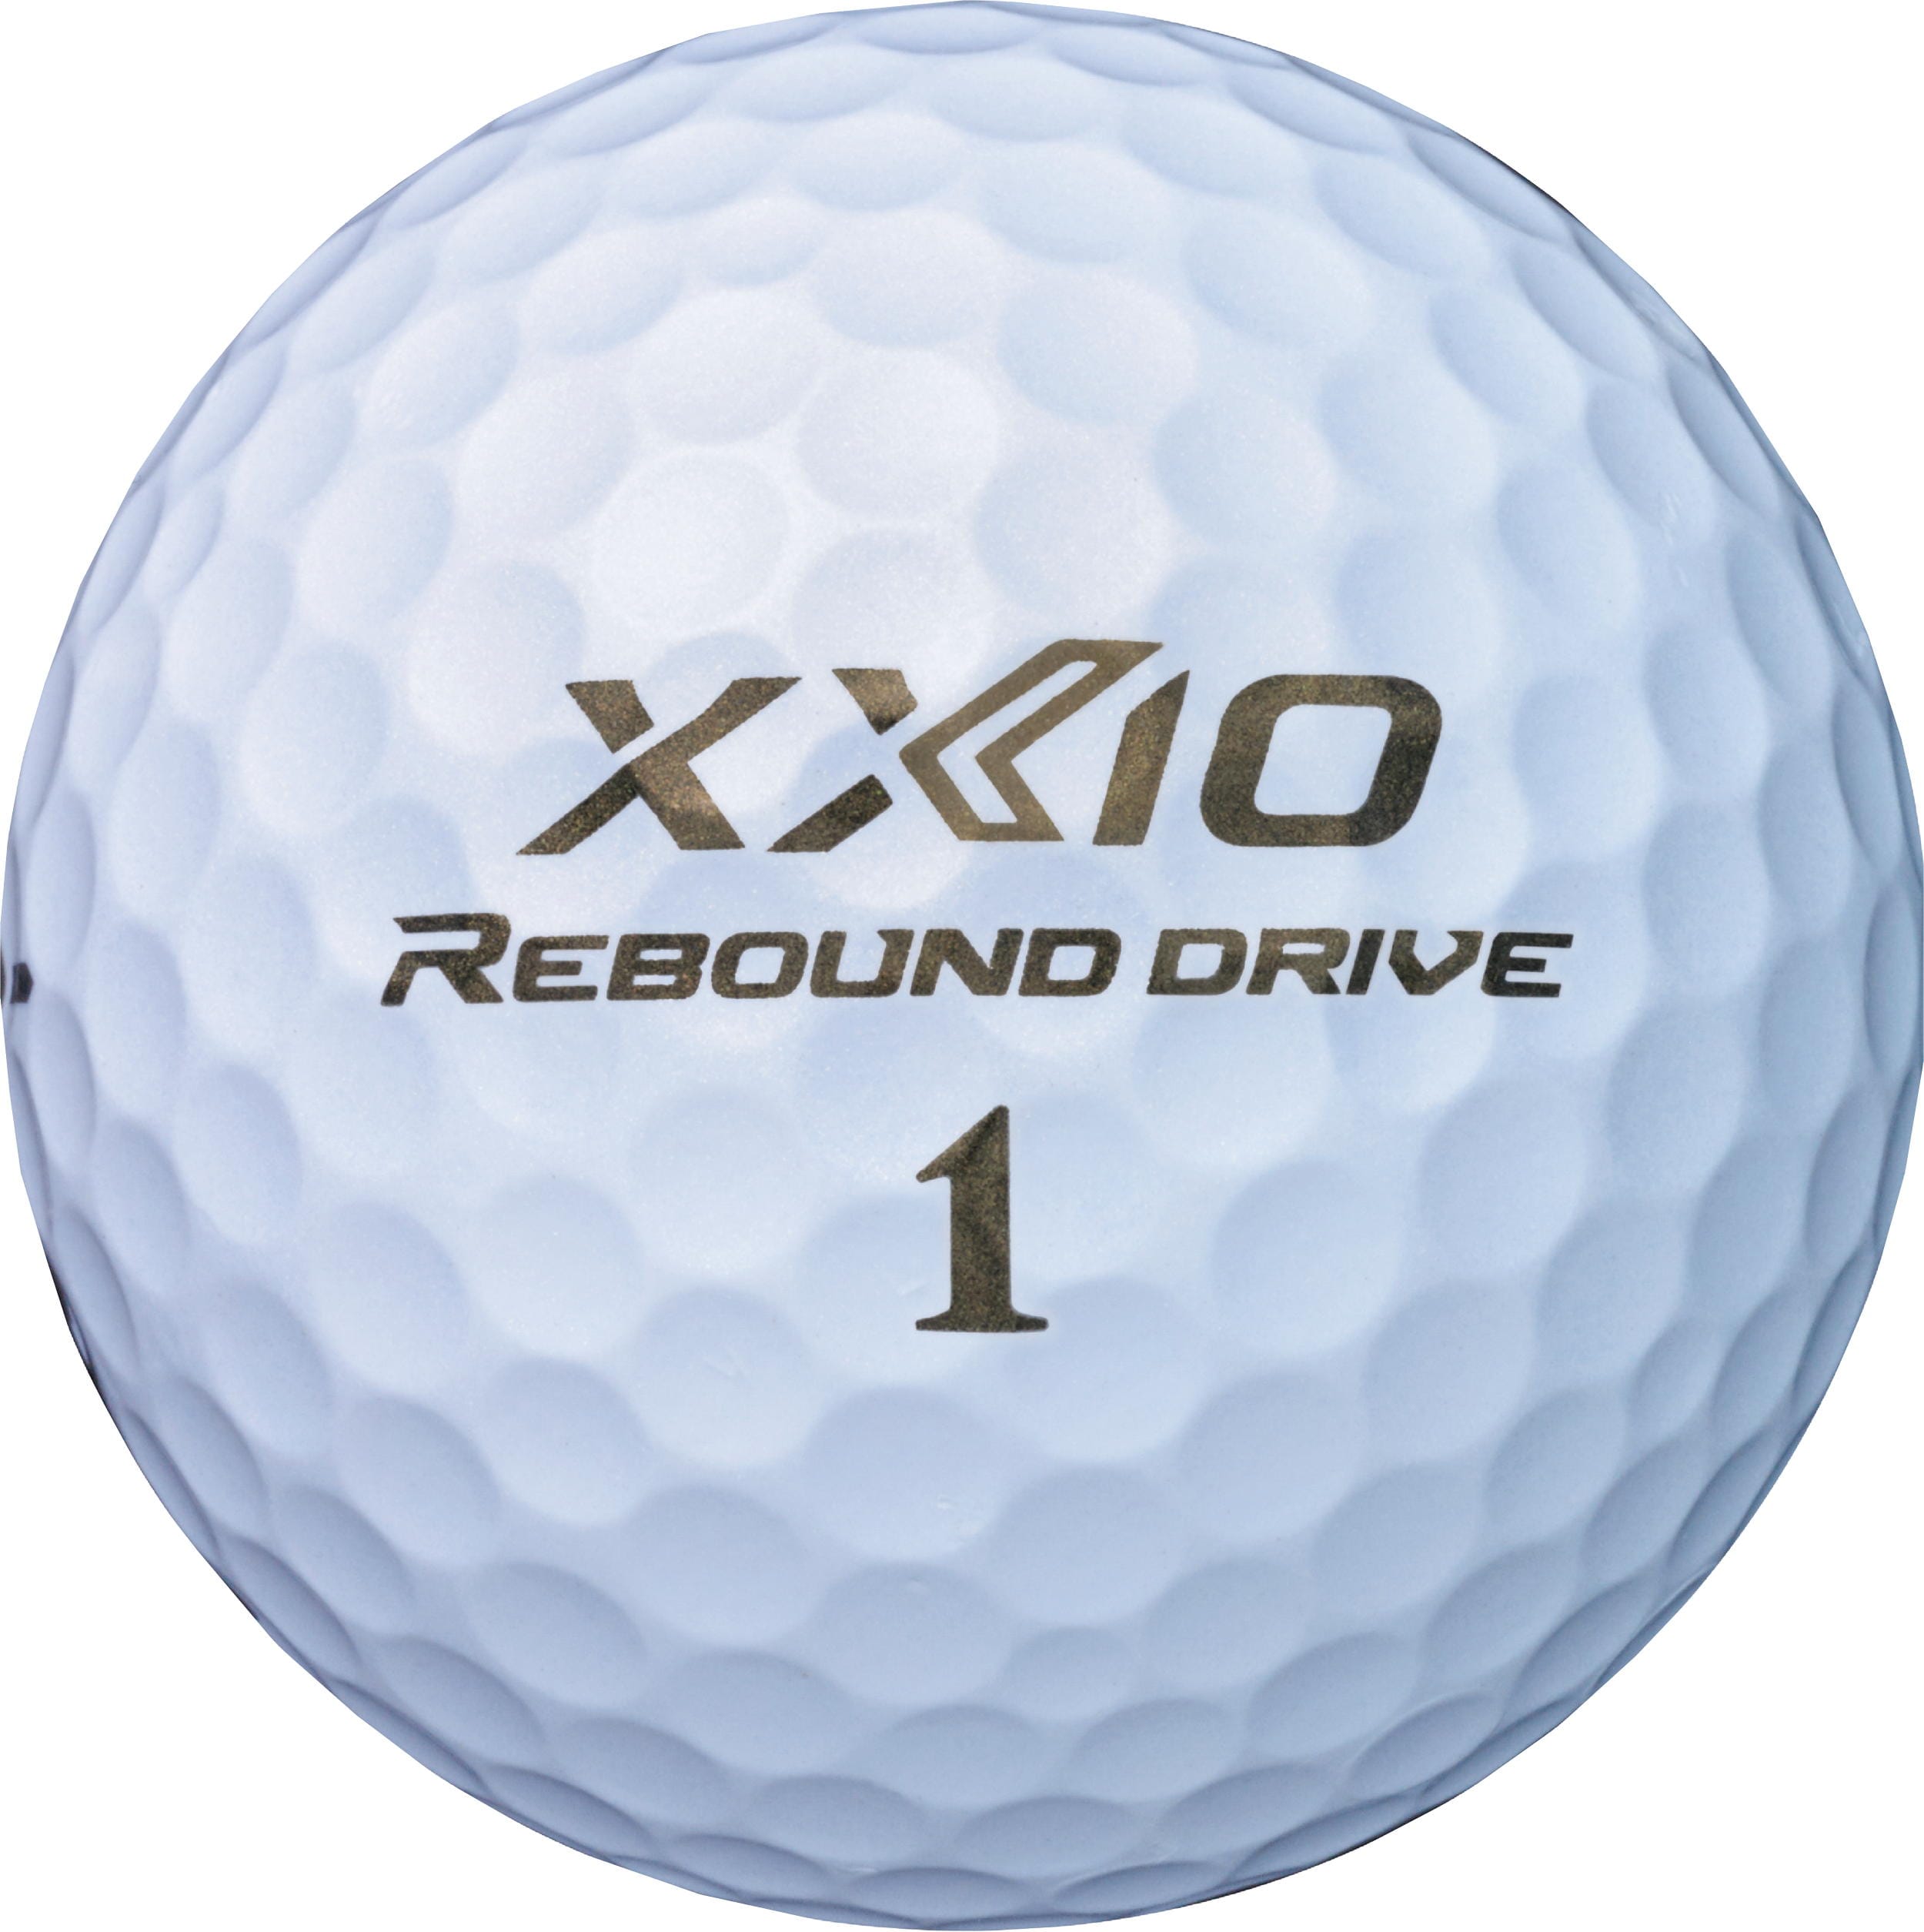 XXIO Rebound Drive Premium Golfbälle, white